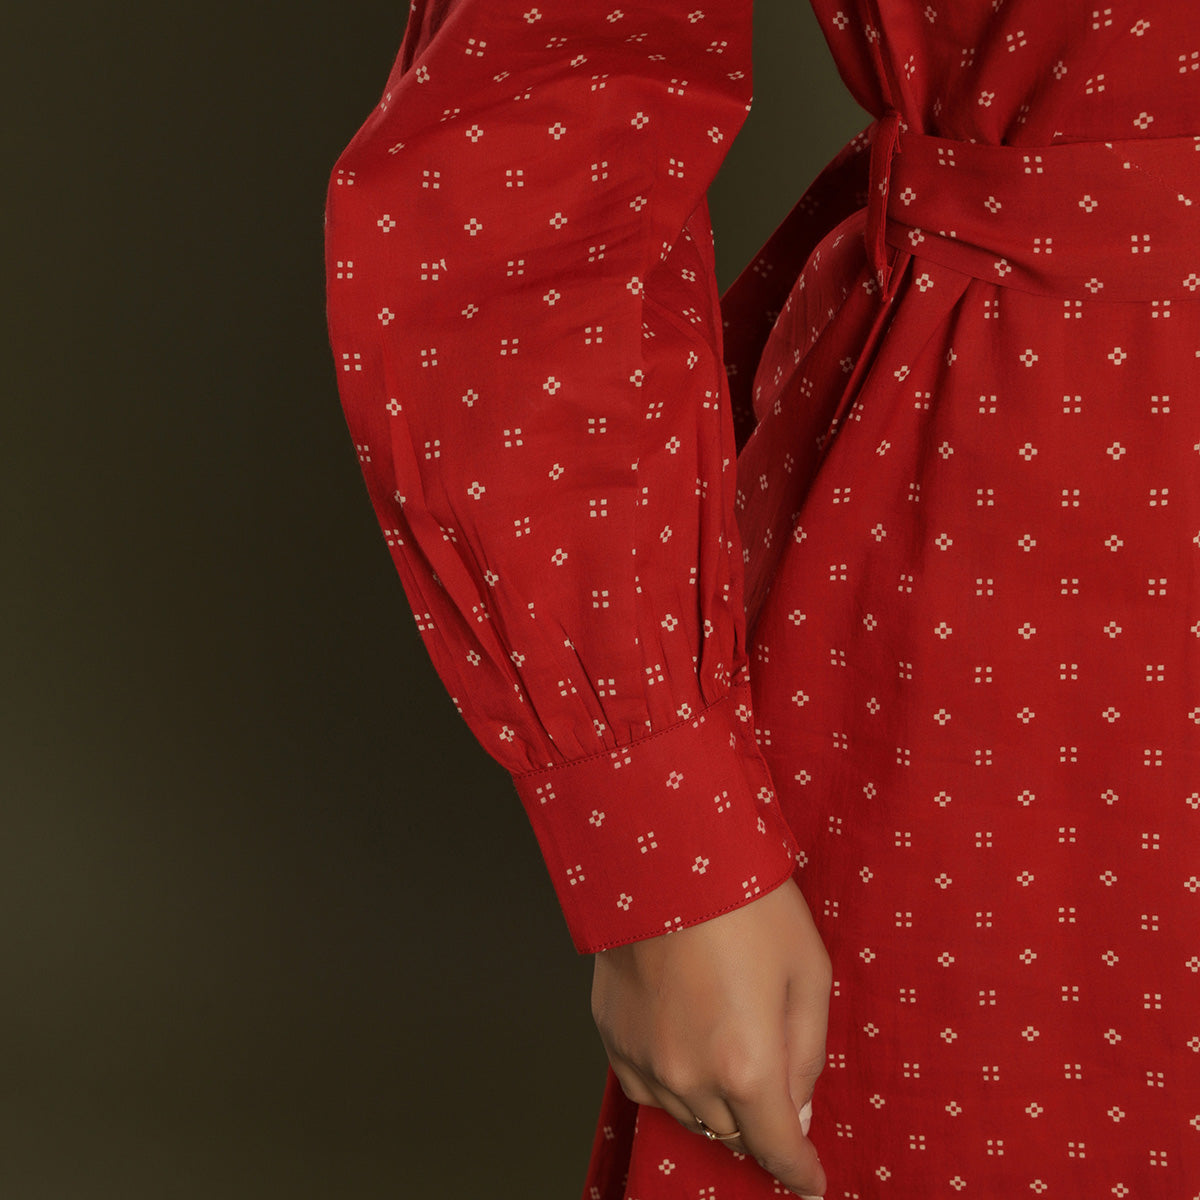 Pixels on Red Puffed Dress Jisora Jaipur